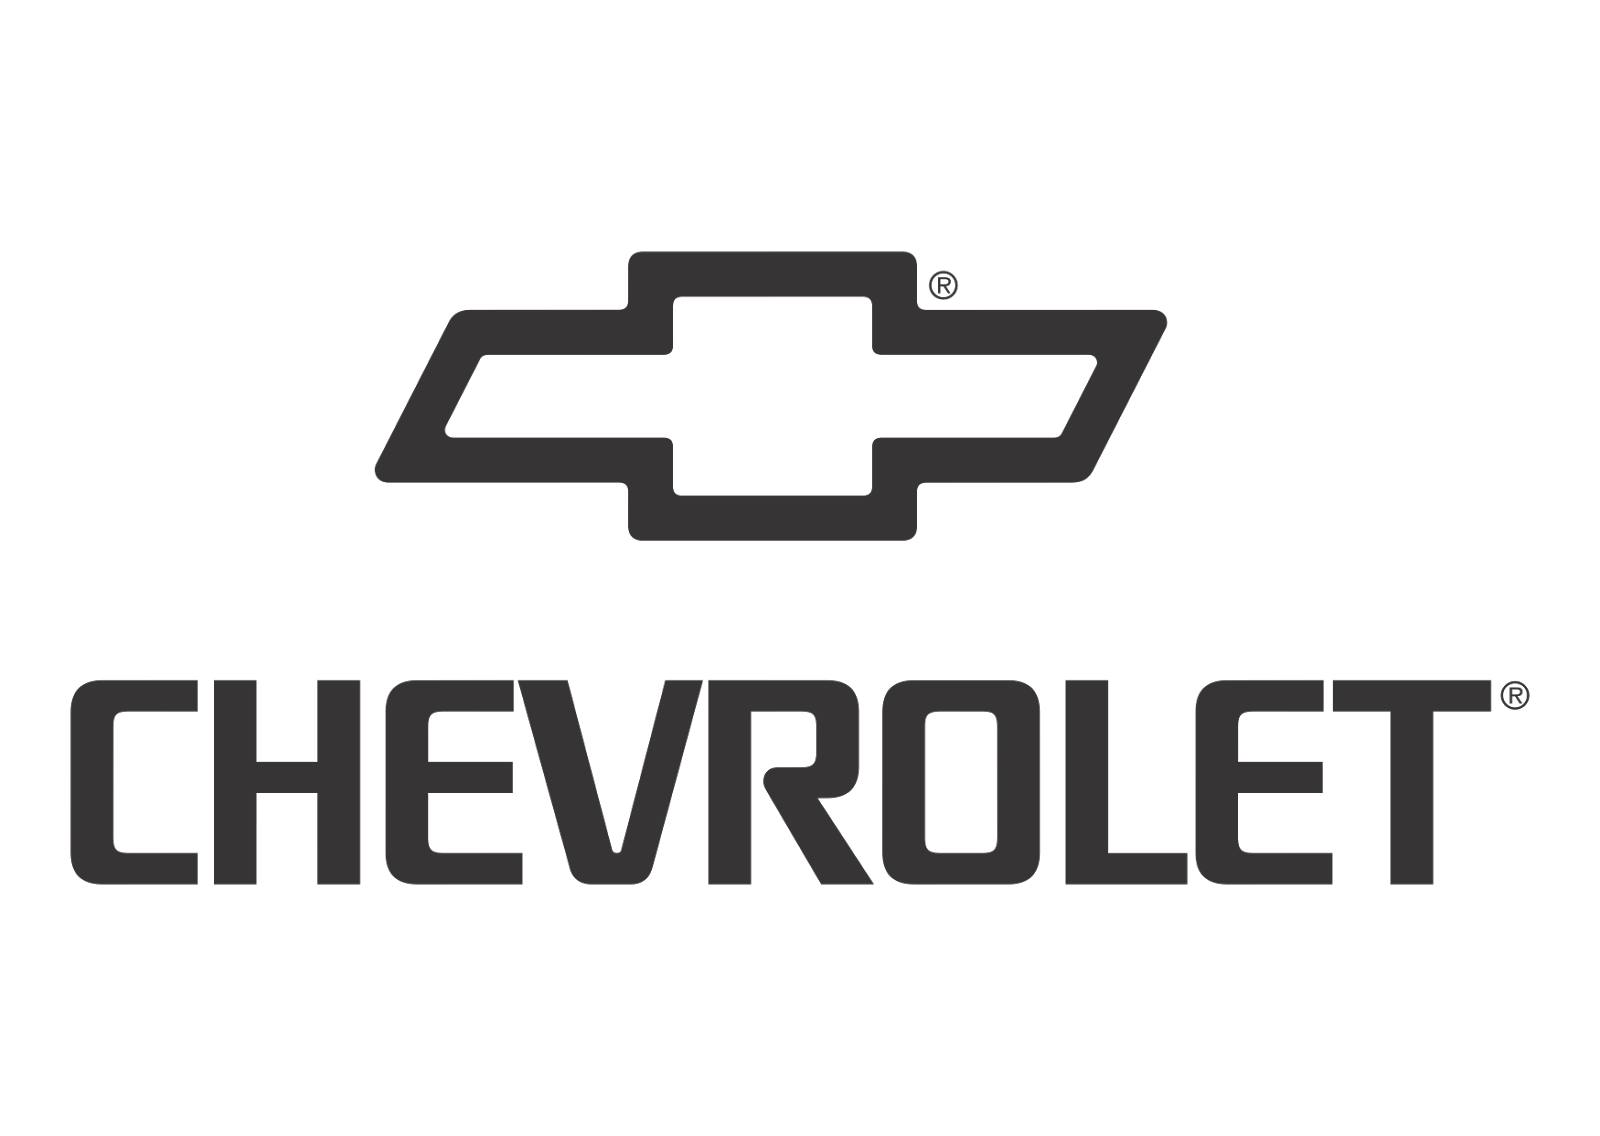 11 Chevrolet Vector Car Images - Car Silhouette Vector Free, Car